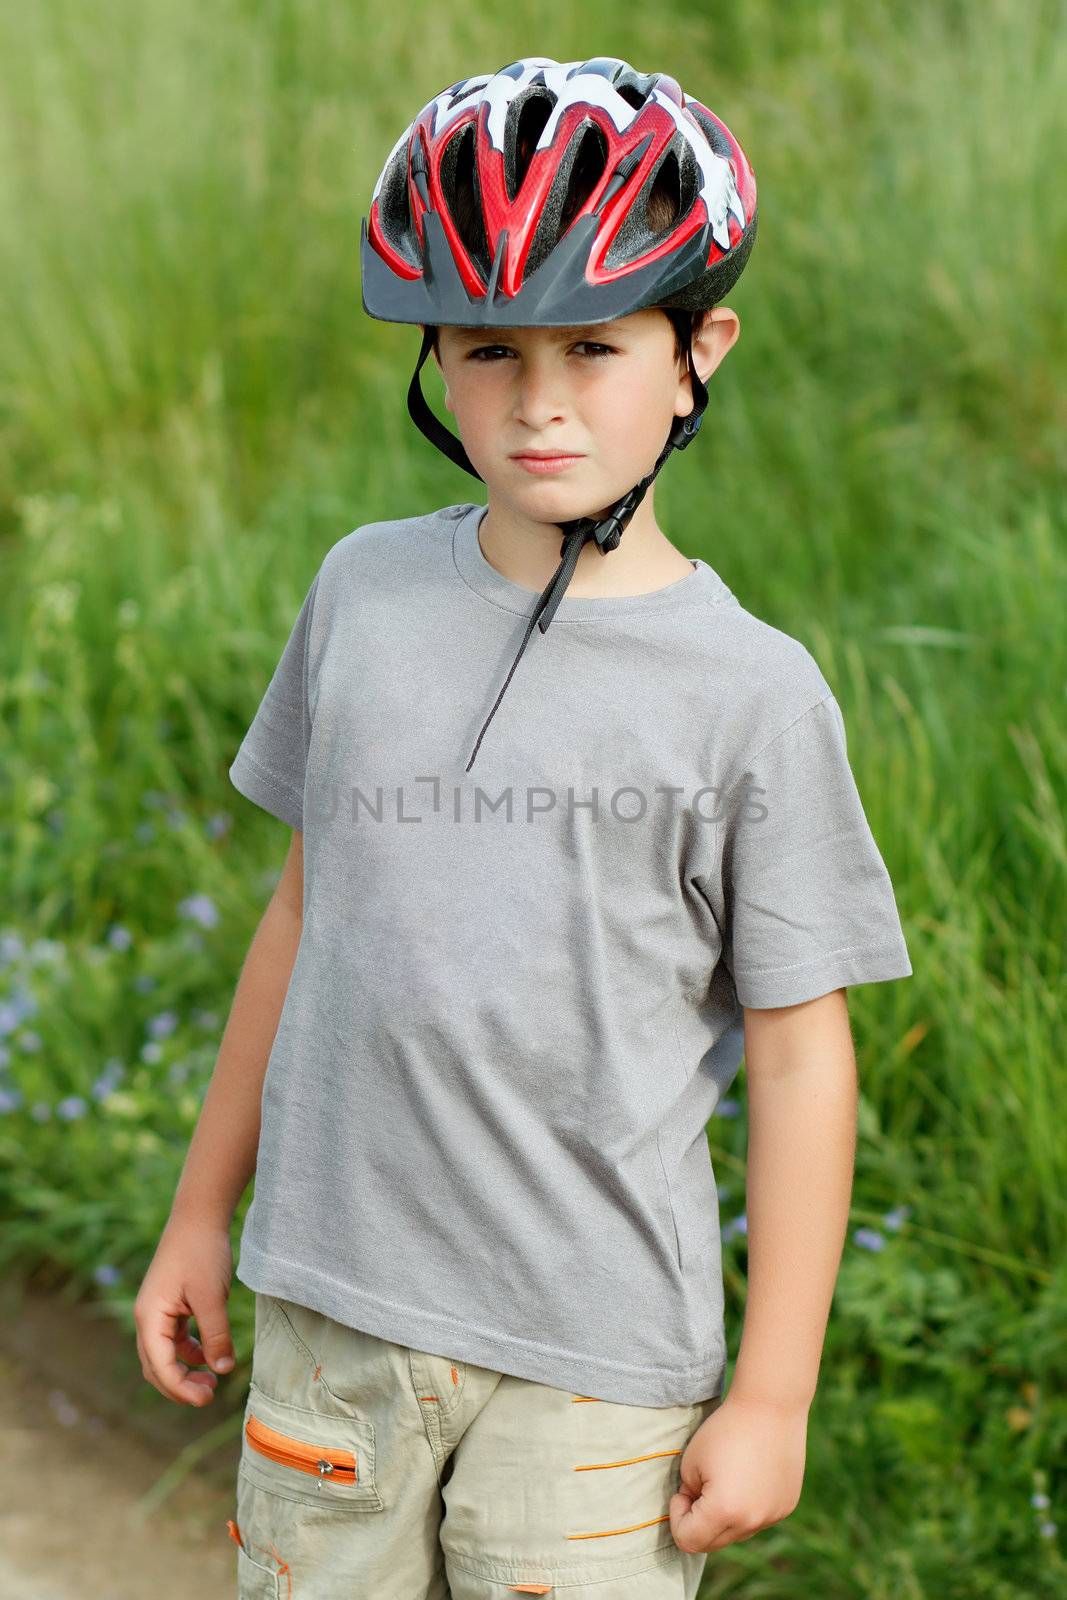 portrait of boy bicyclist with helmet by artush